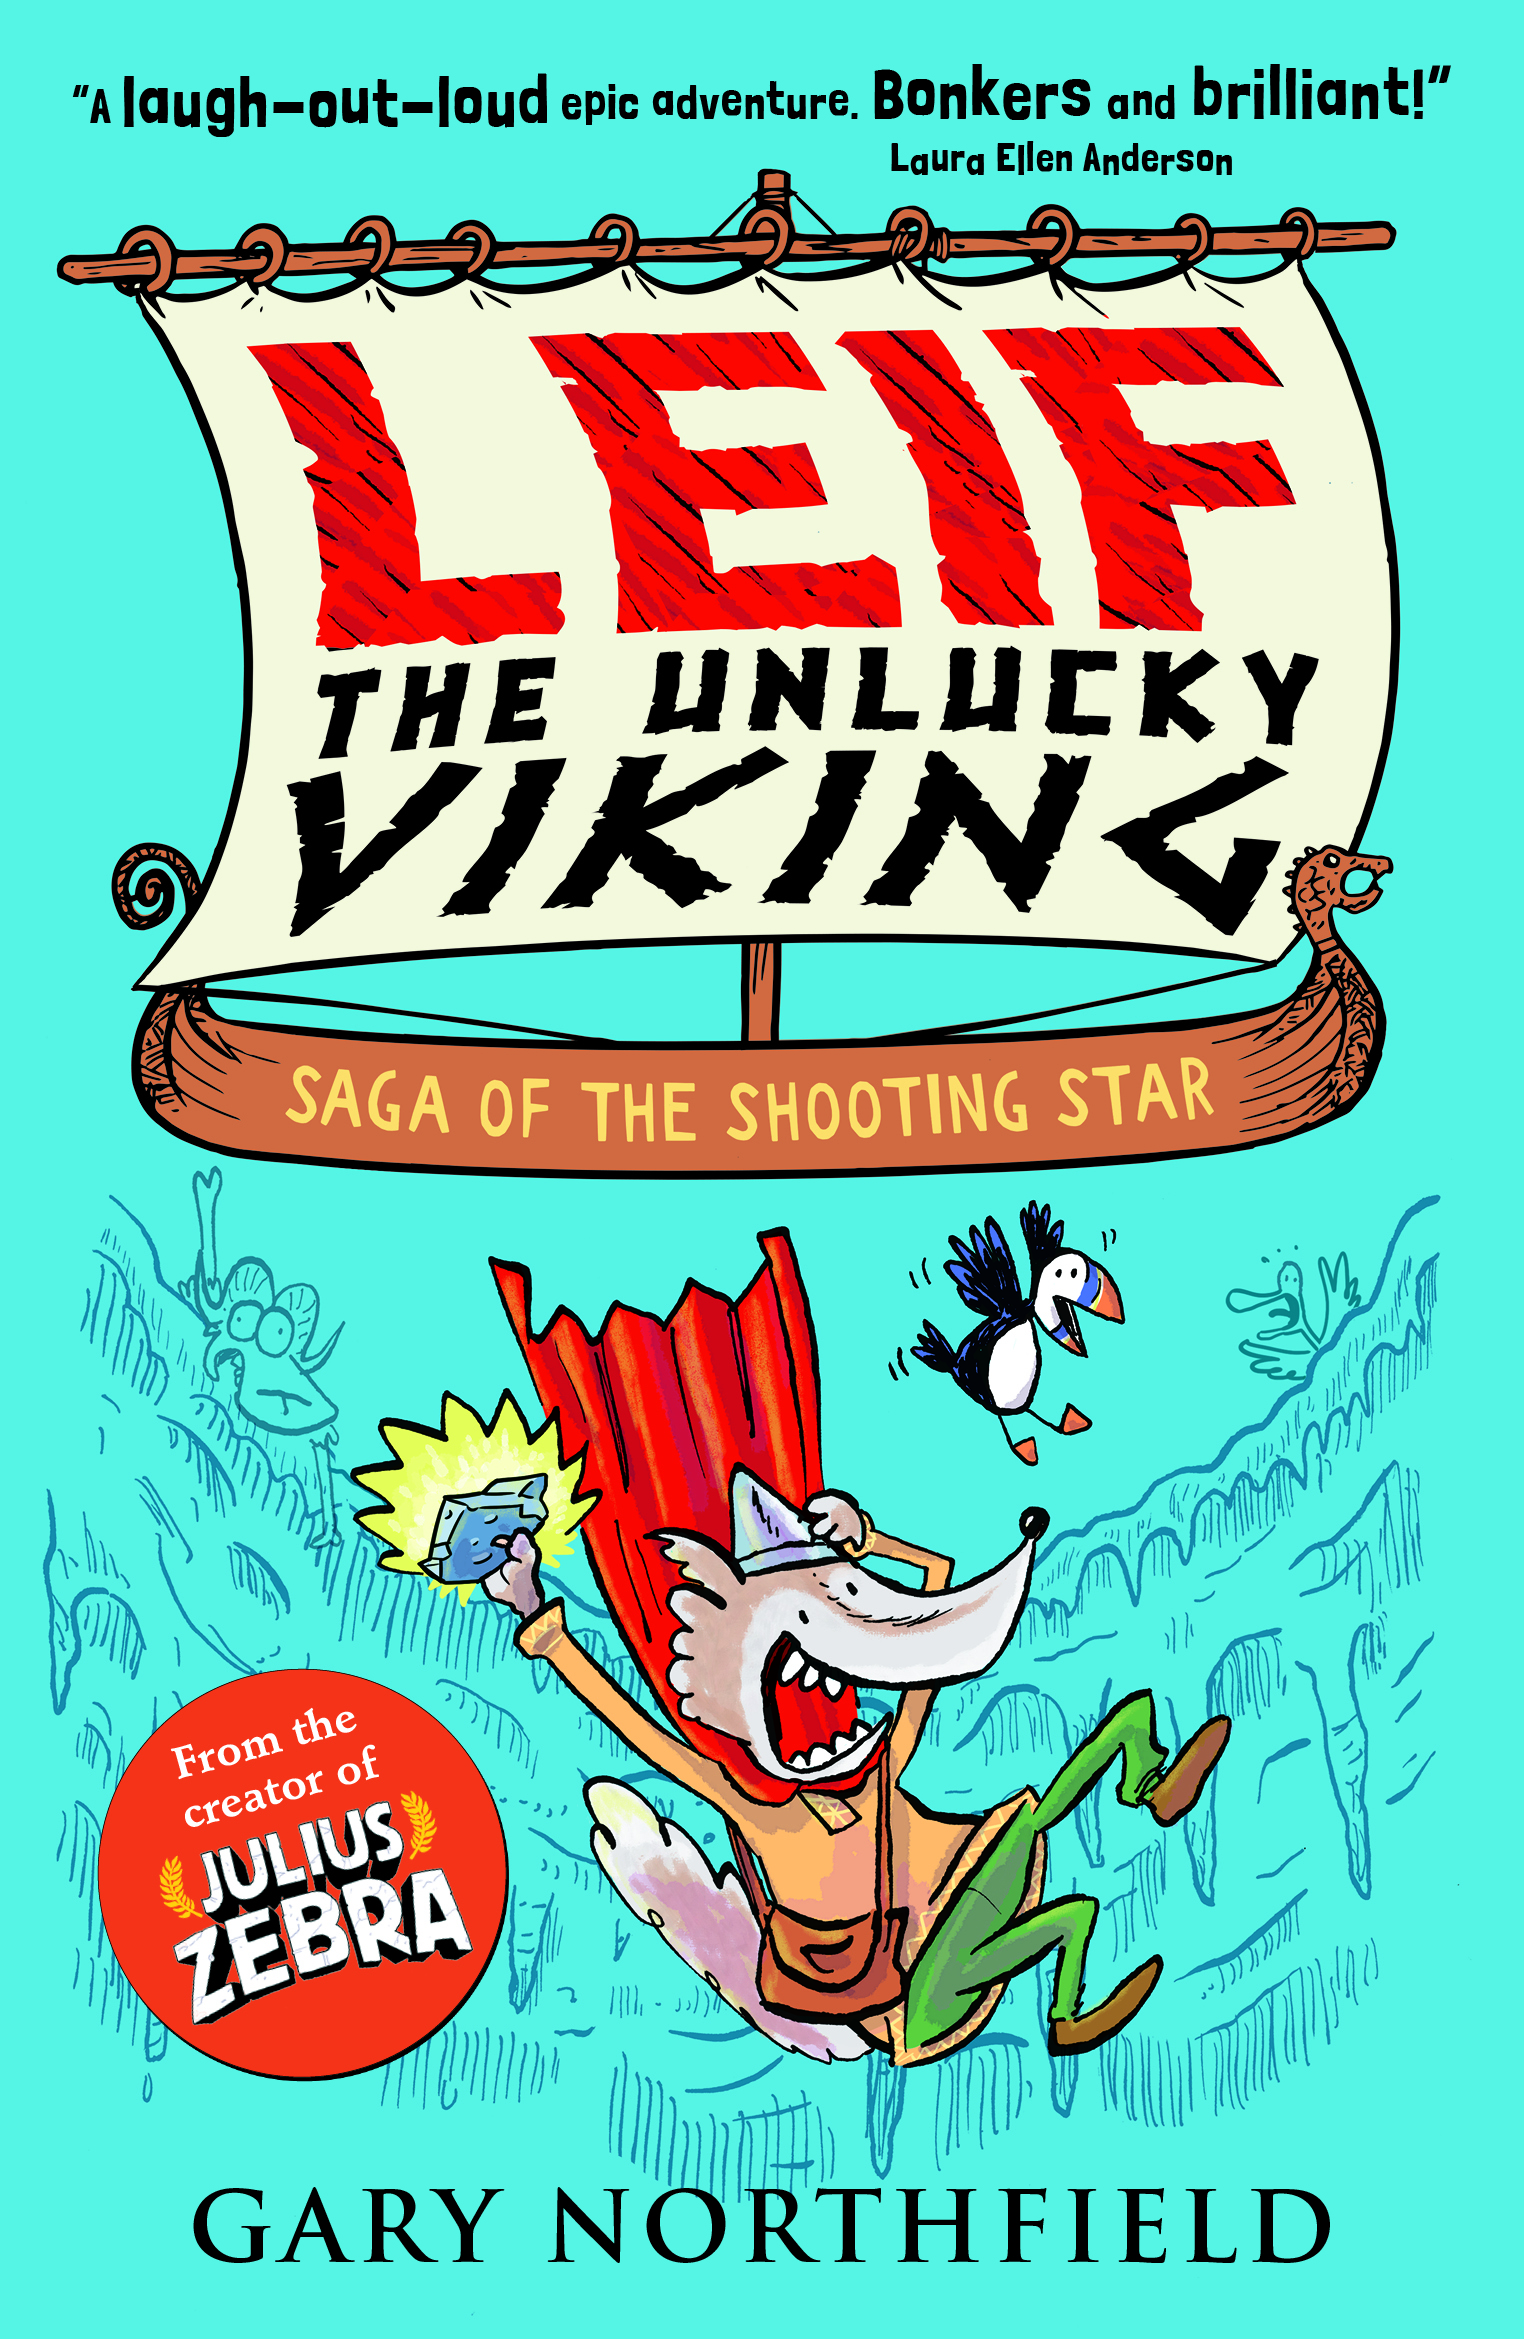 Leif-the-Unlucky-Viking-Saga-of-the-Shooting-Star